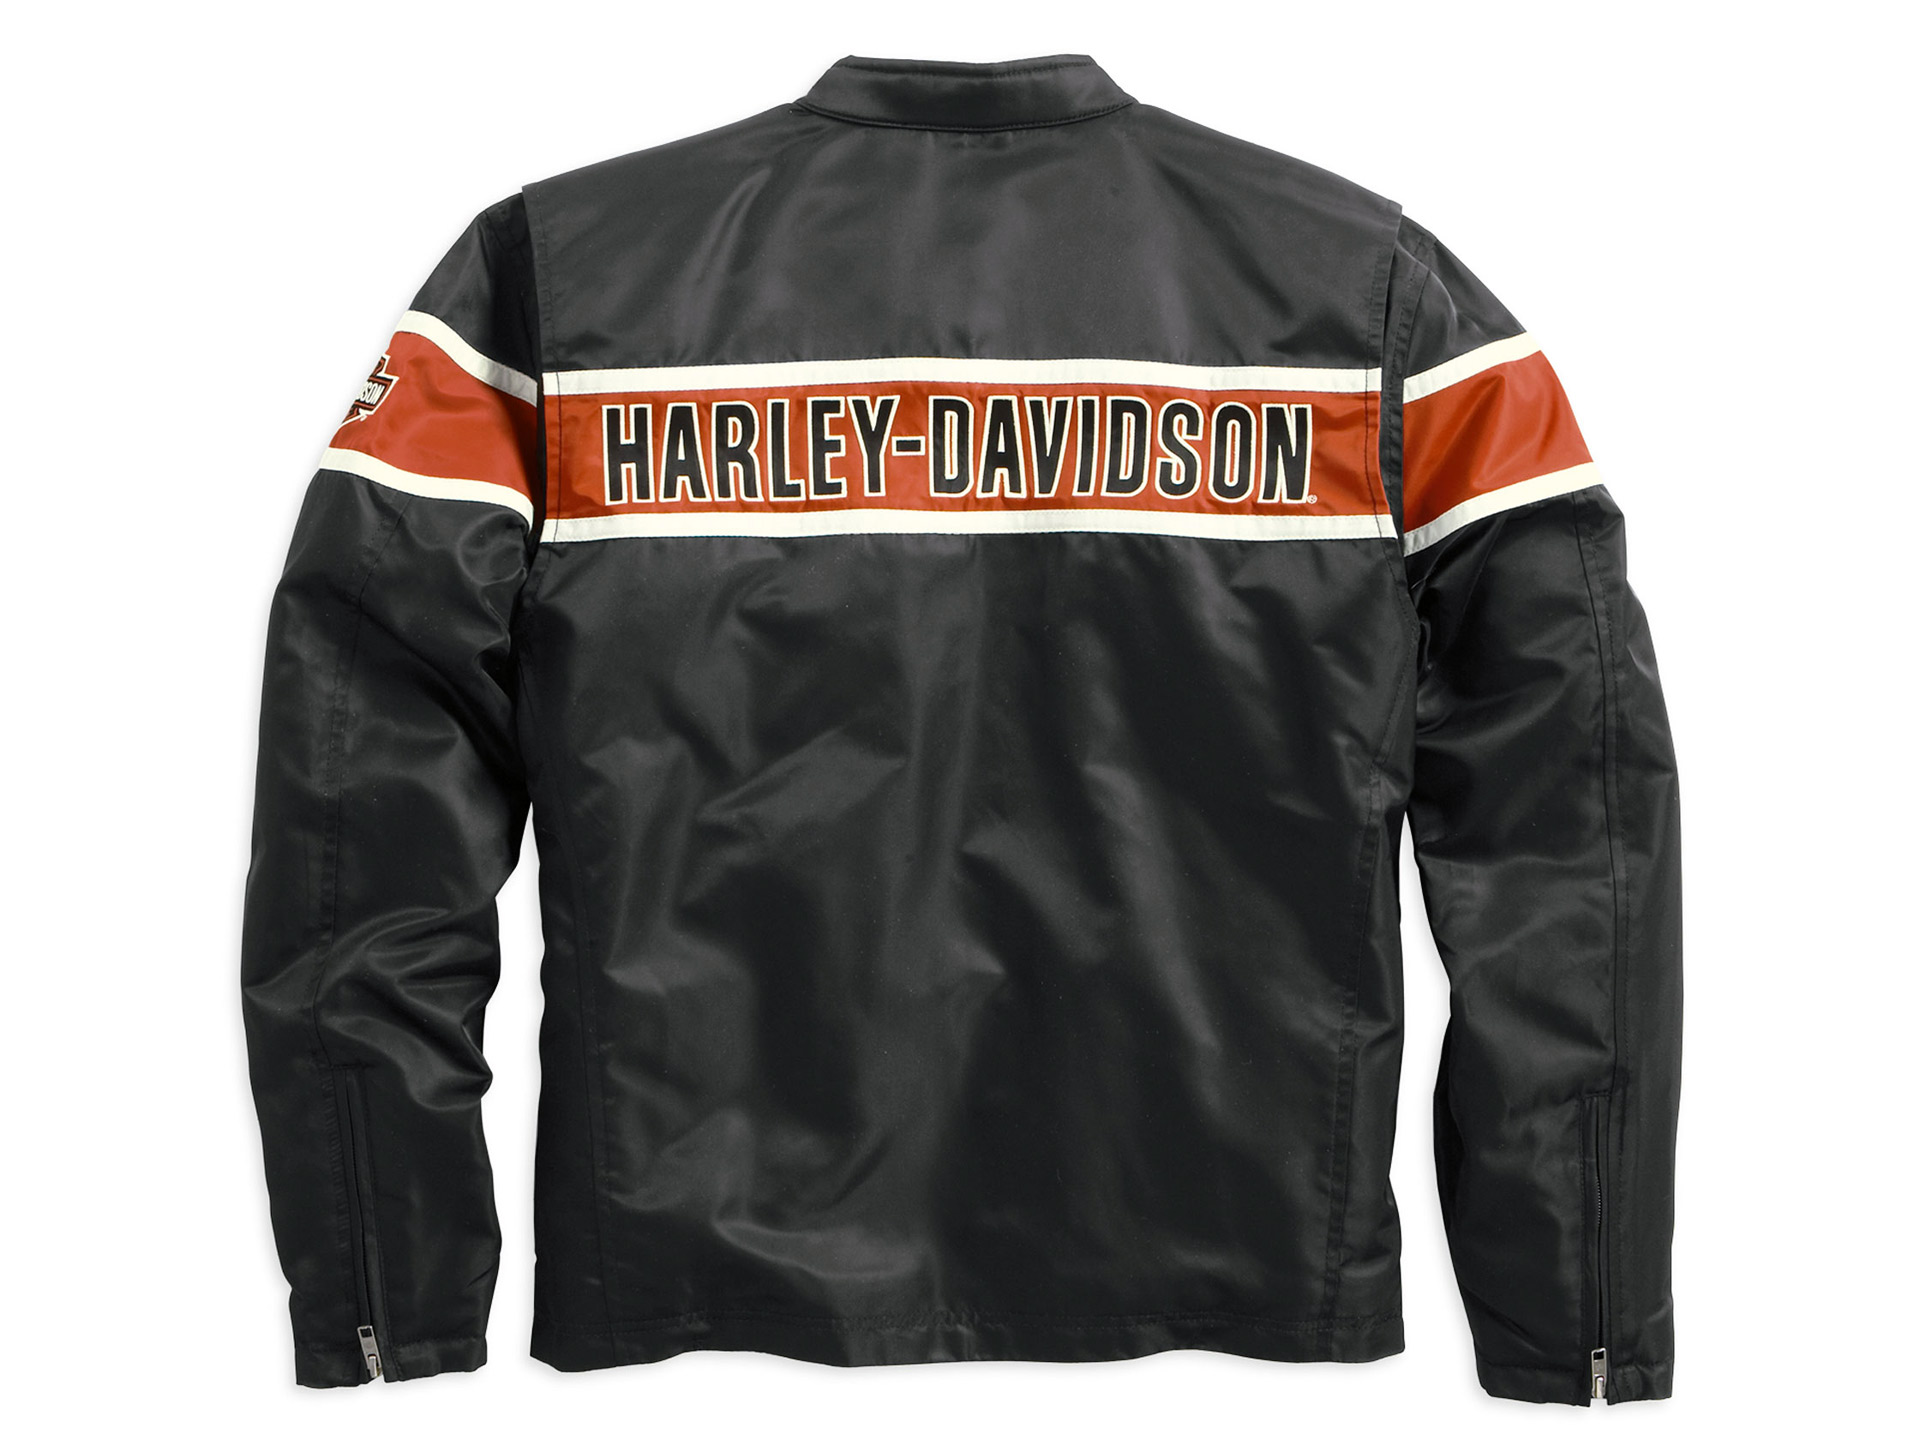 98162 21vm Harley Davidson Generations Jacket At Thunderbike Shop